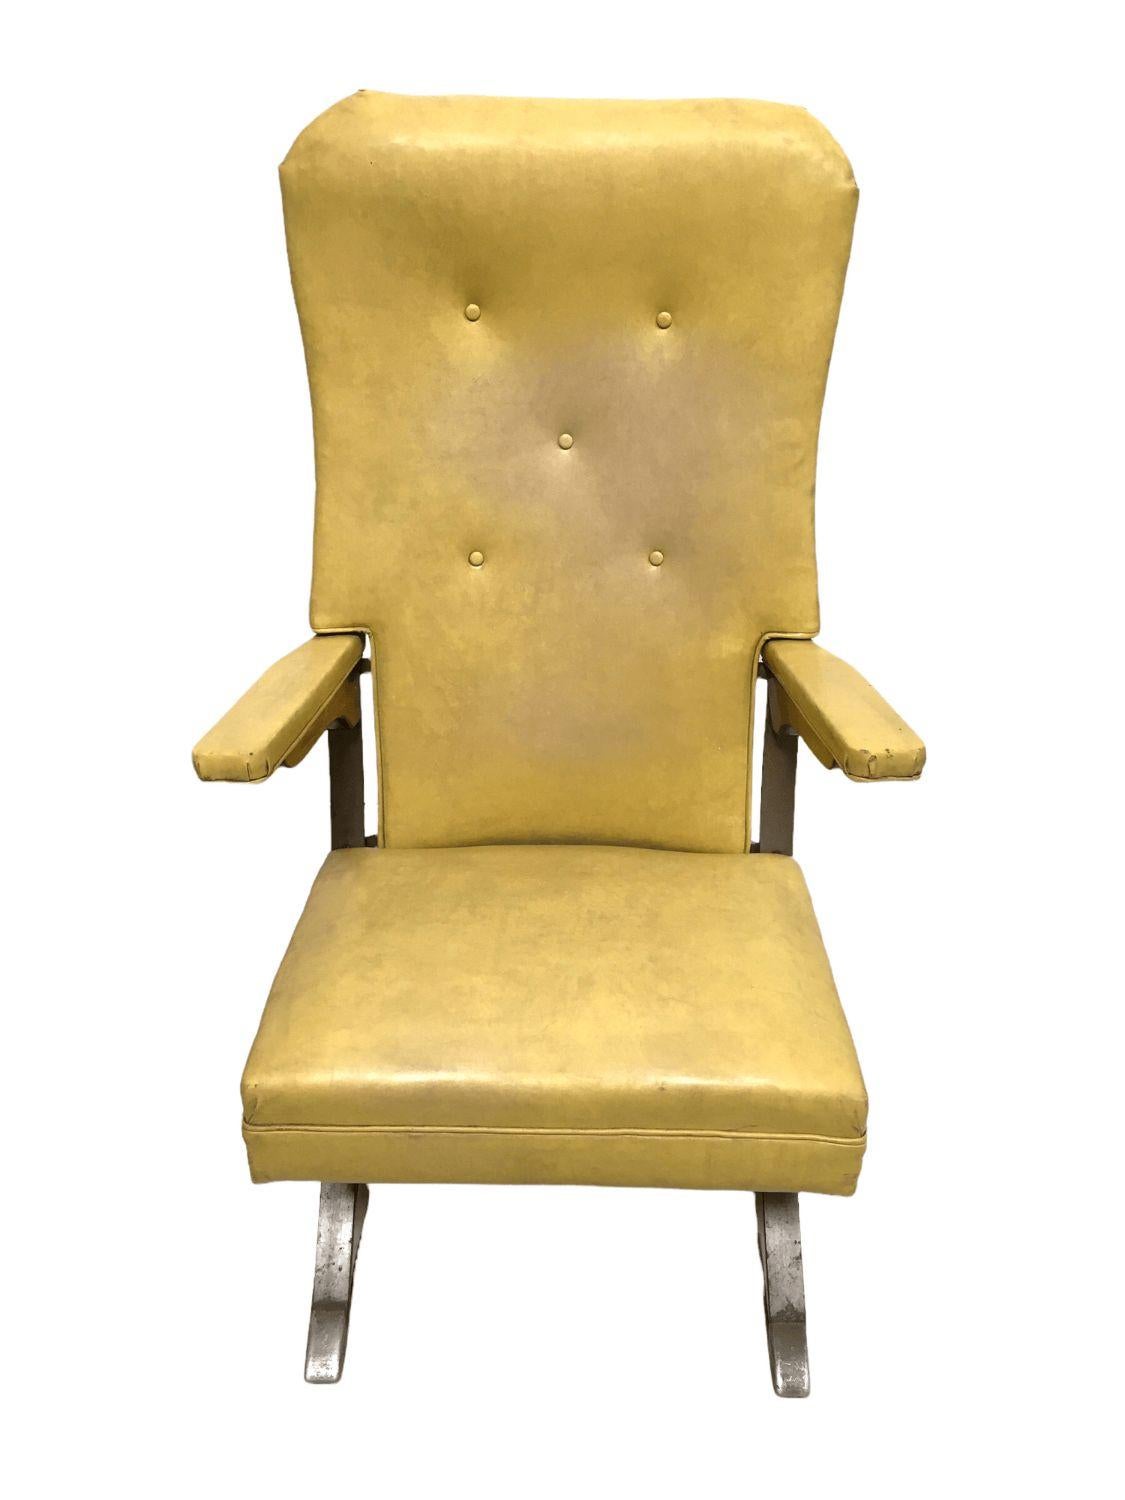 Américain Vieille chaise Rock-a-Chair Cantilever Rocker Chair en vinyle doré de moisson en vente